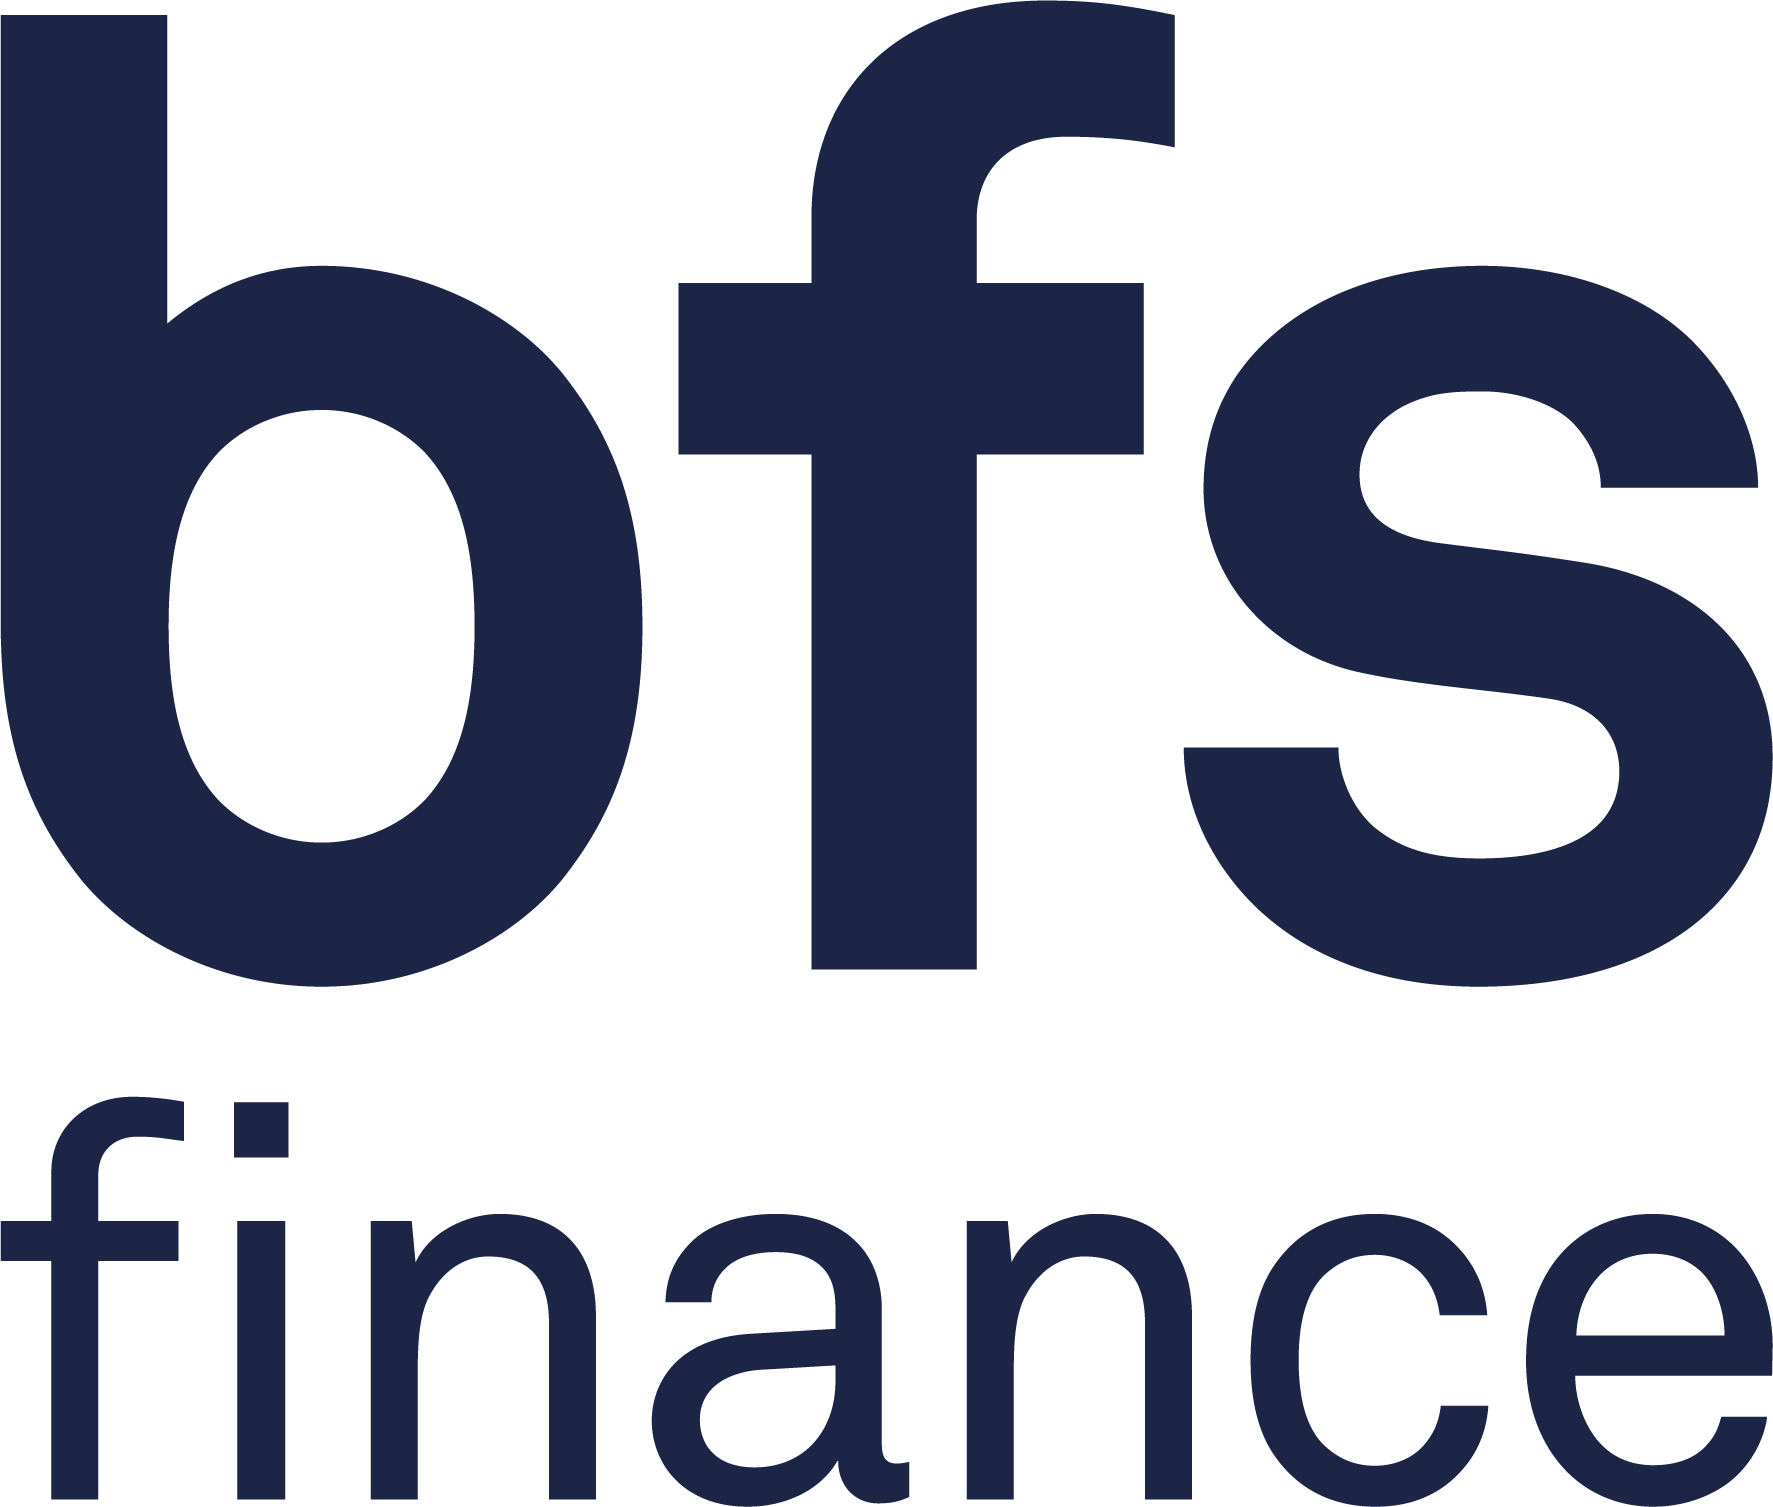 BFS finance GmbH